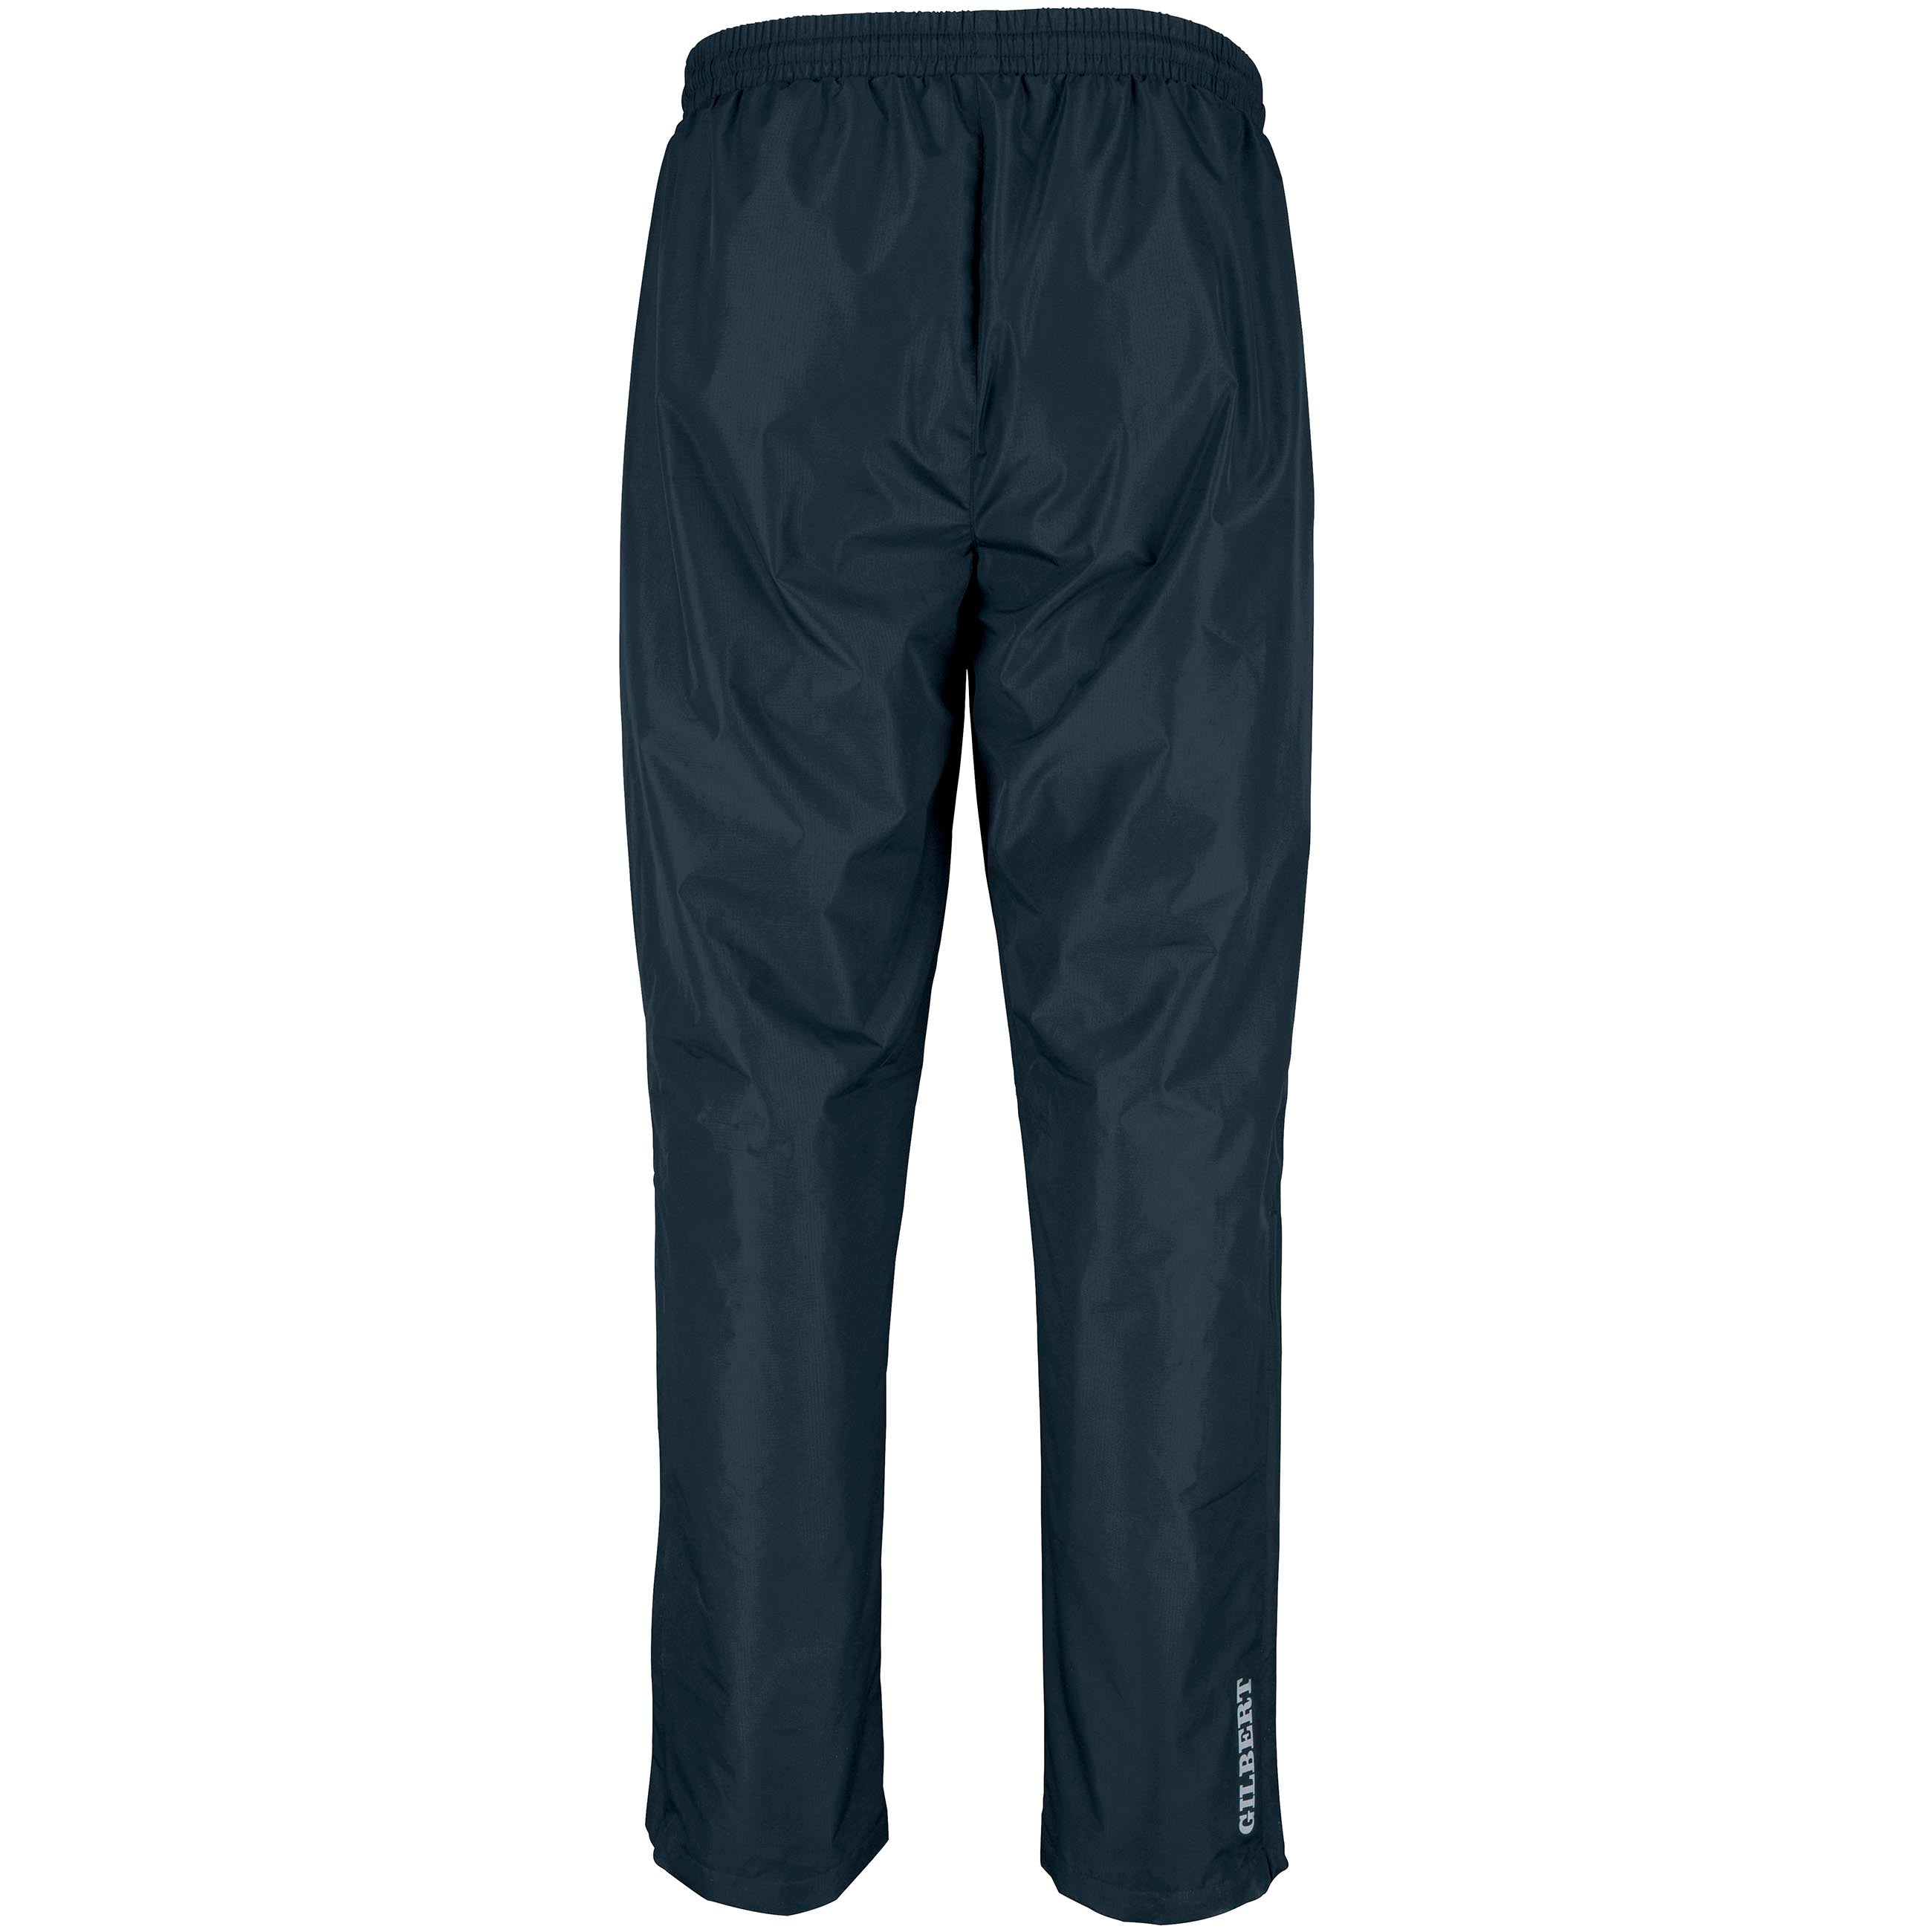 Men's Pants Water Resistant Cargo Pants Lightweight Drawstring Sweatpants  Work Pants Outdoor Jogging Trousers With Pockets - Walmart.com